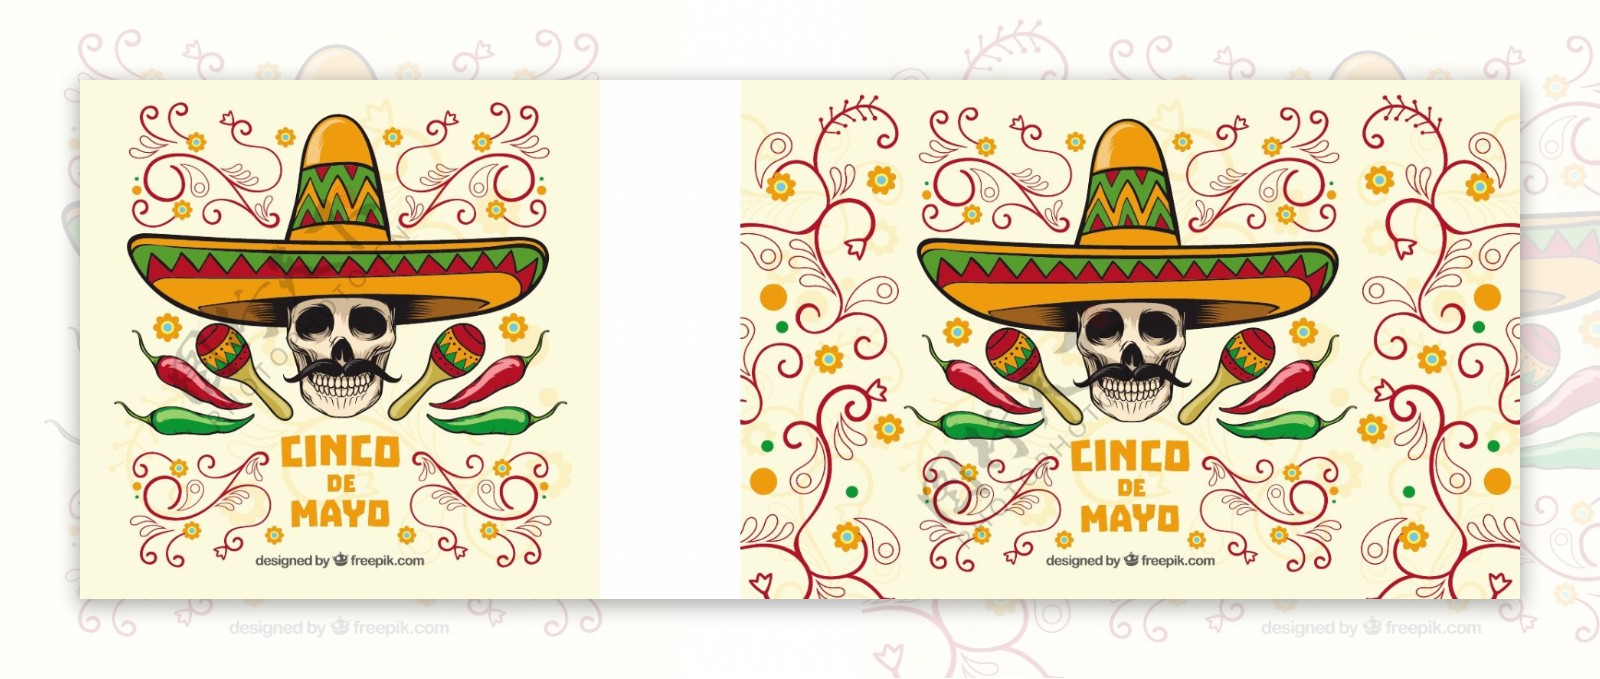 Cincodemayo的头骨背景和墨西哥帽